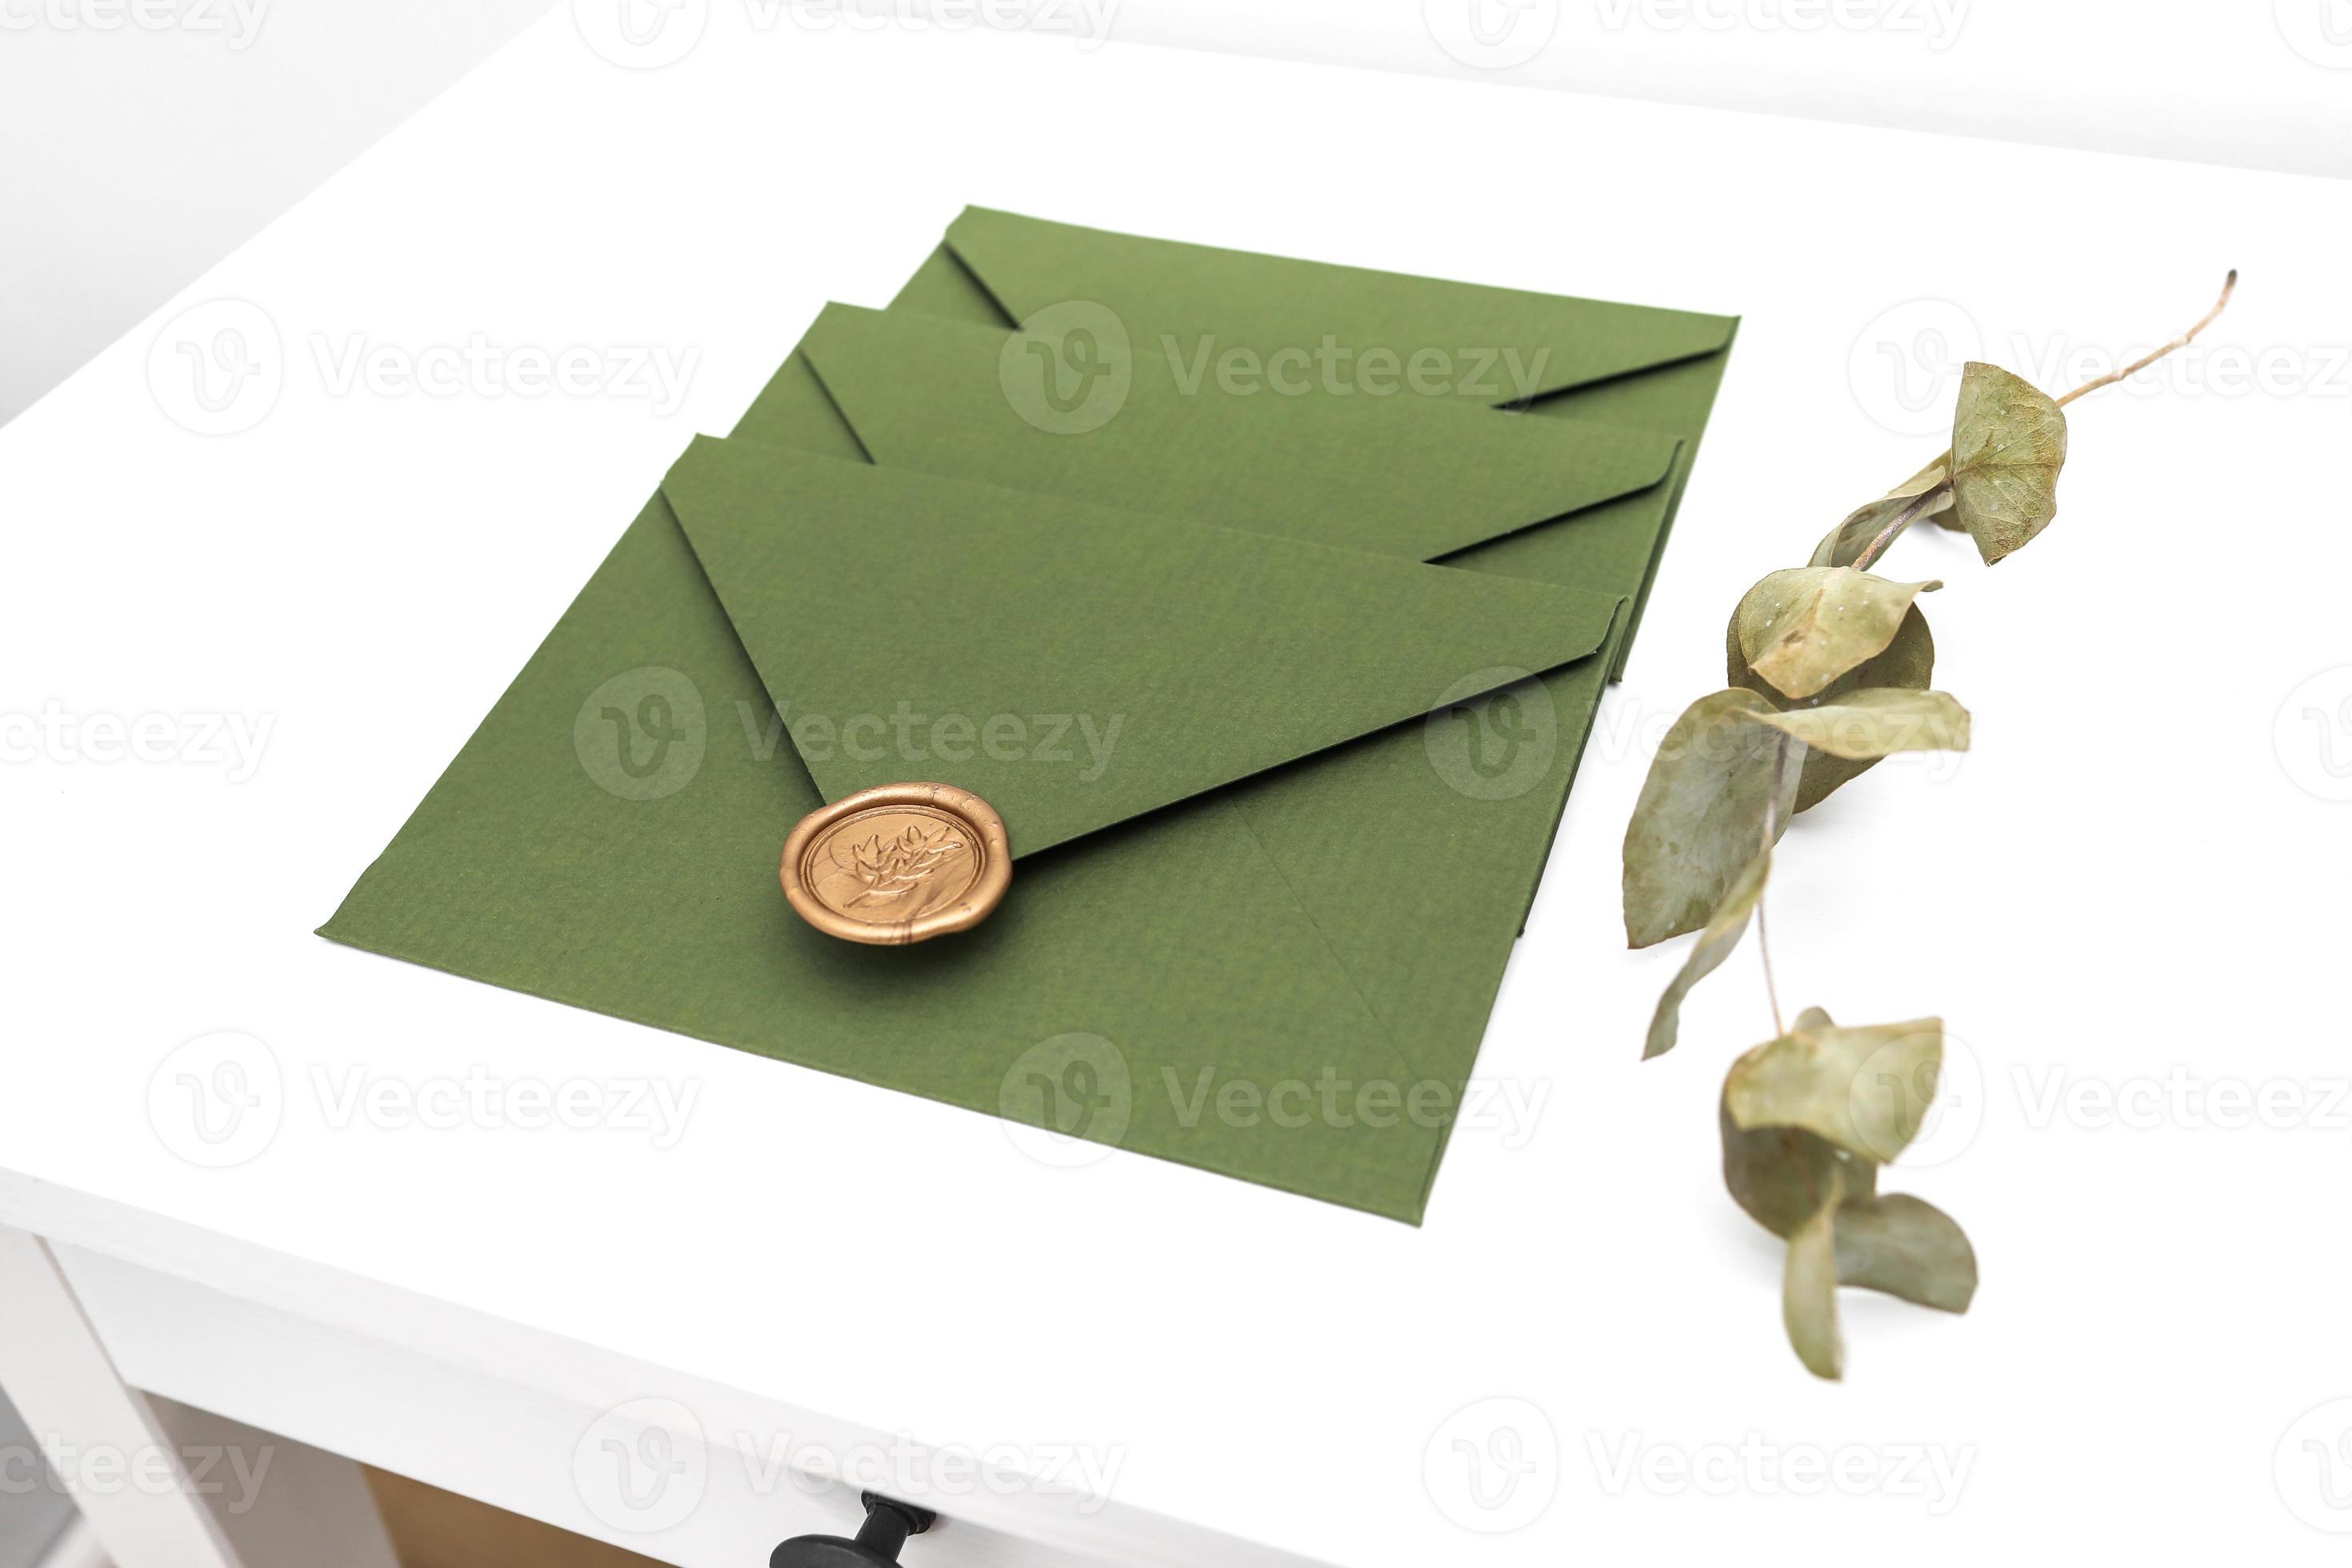 https://static.vecteezy.com/ti/photos-gratuite/p2/6044333-enveloppe-verte-avec-carton-designer-et-sceau-sur-fond-blanc-enveloppe-avec-sceau-photo.jpg